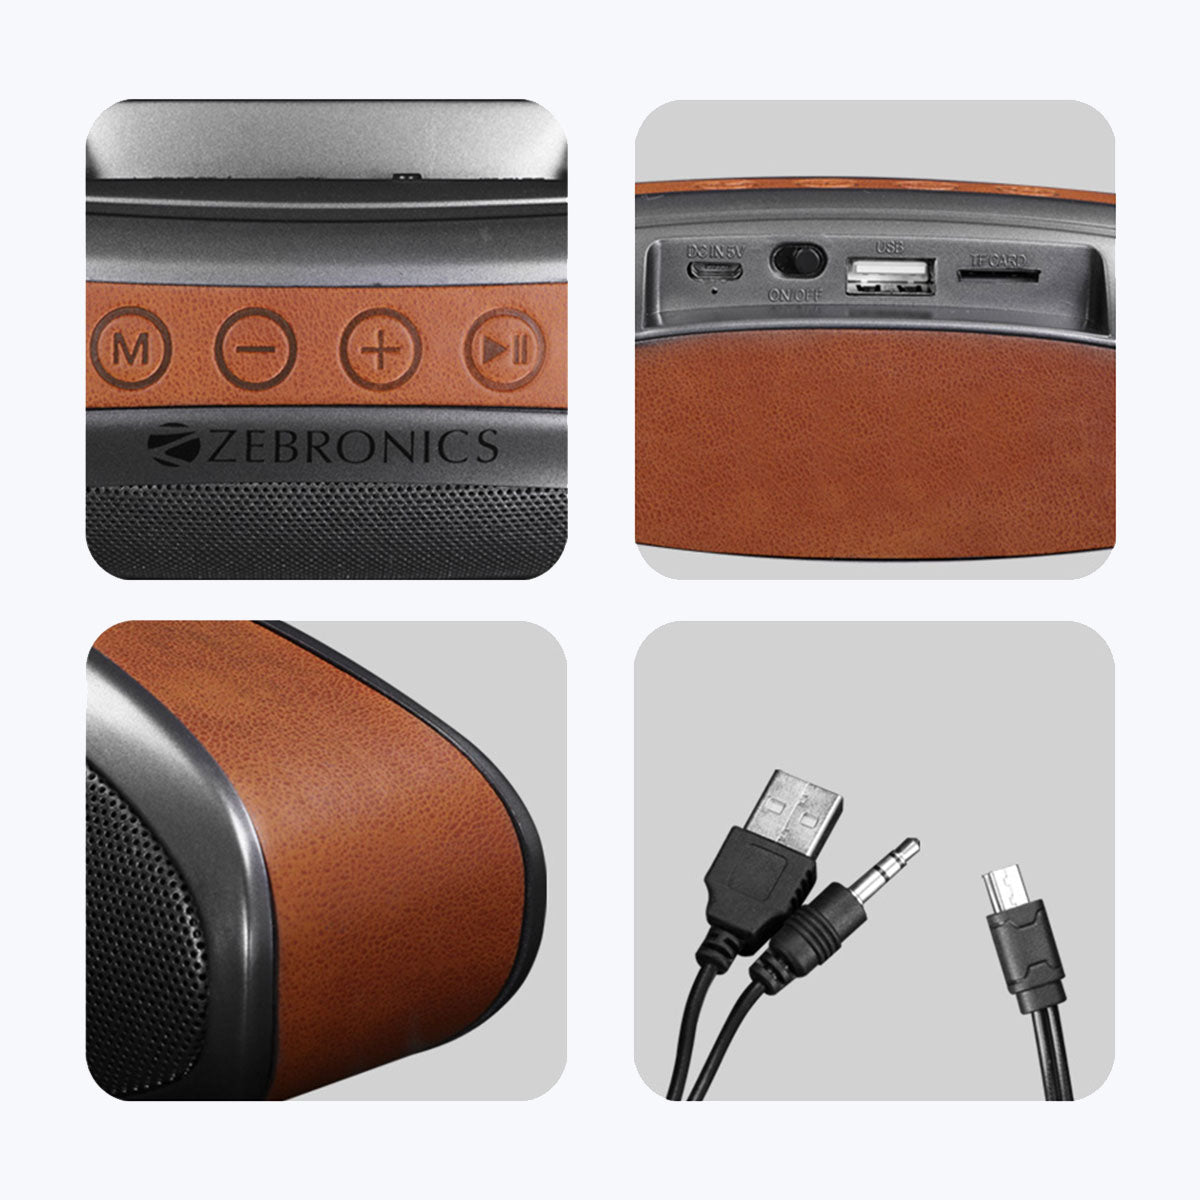 Zeb-Vogue - Wireless Speaker - Zebronics